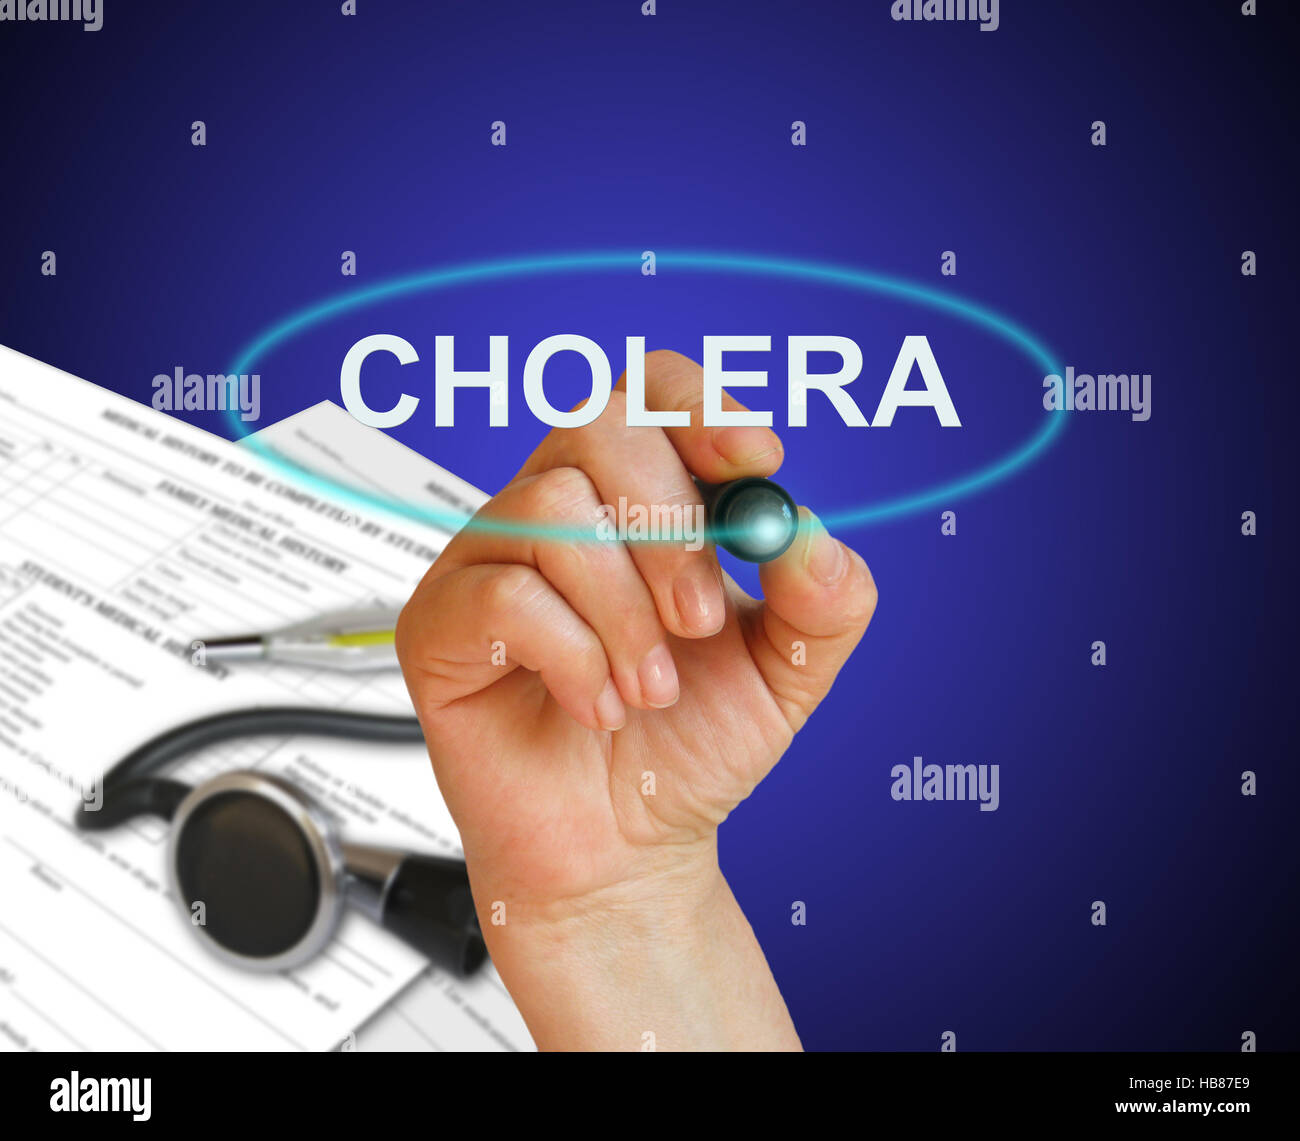 Cholera disease Stock Photo